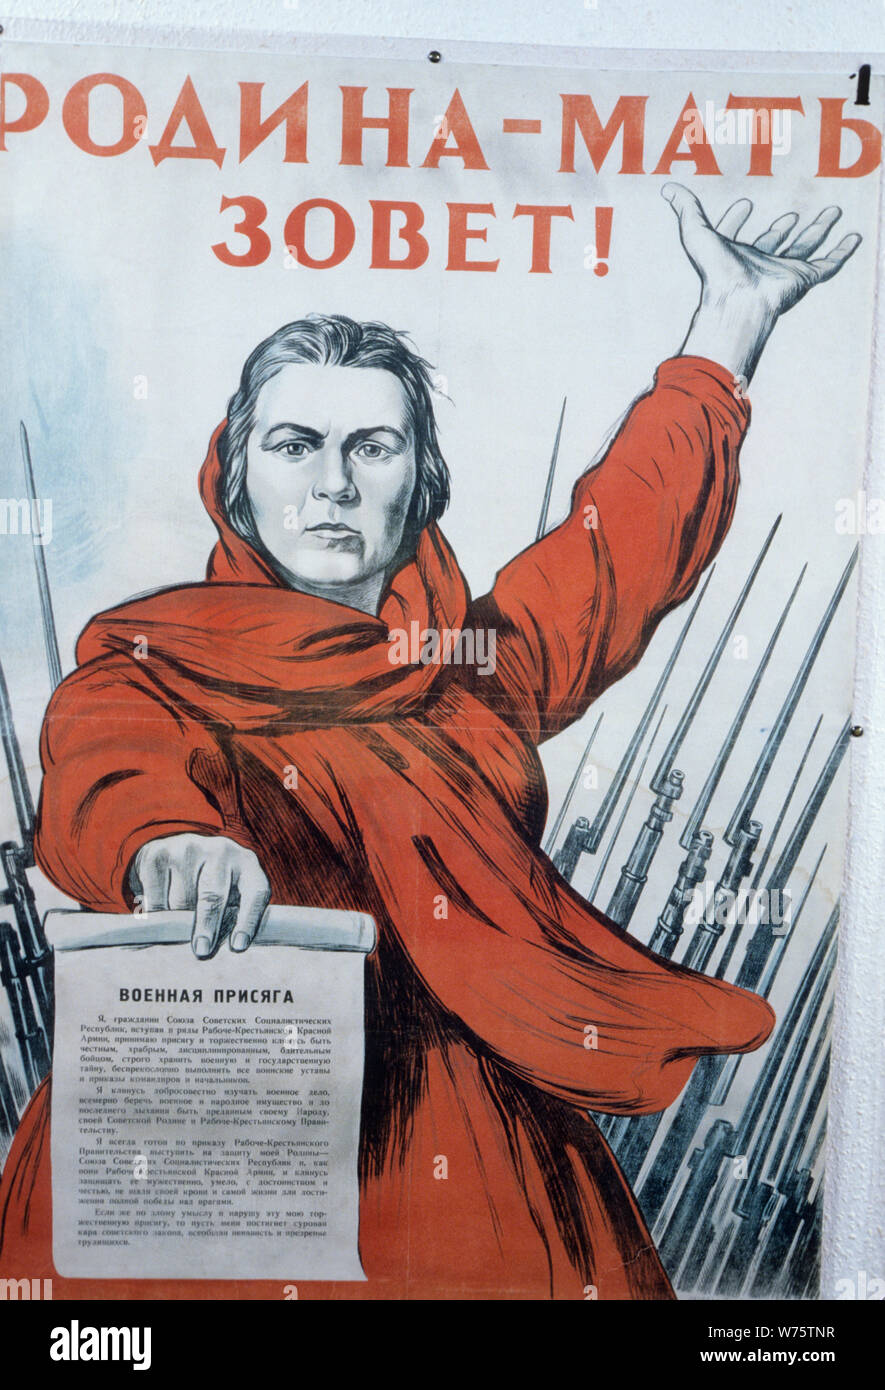 manifesto by irakliy toidze, the motherland calls, emblem of the opposition to fascism, 1941 Stock Photo